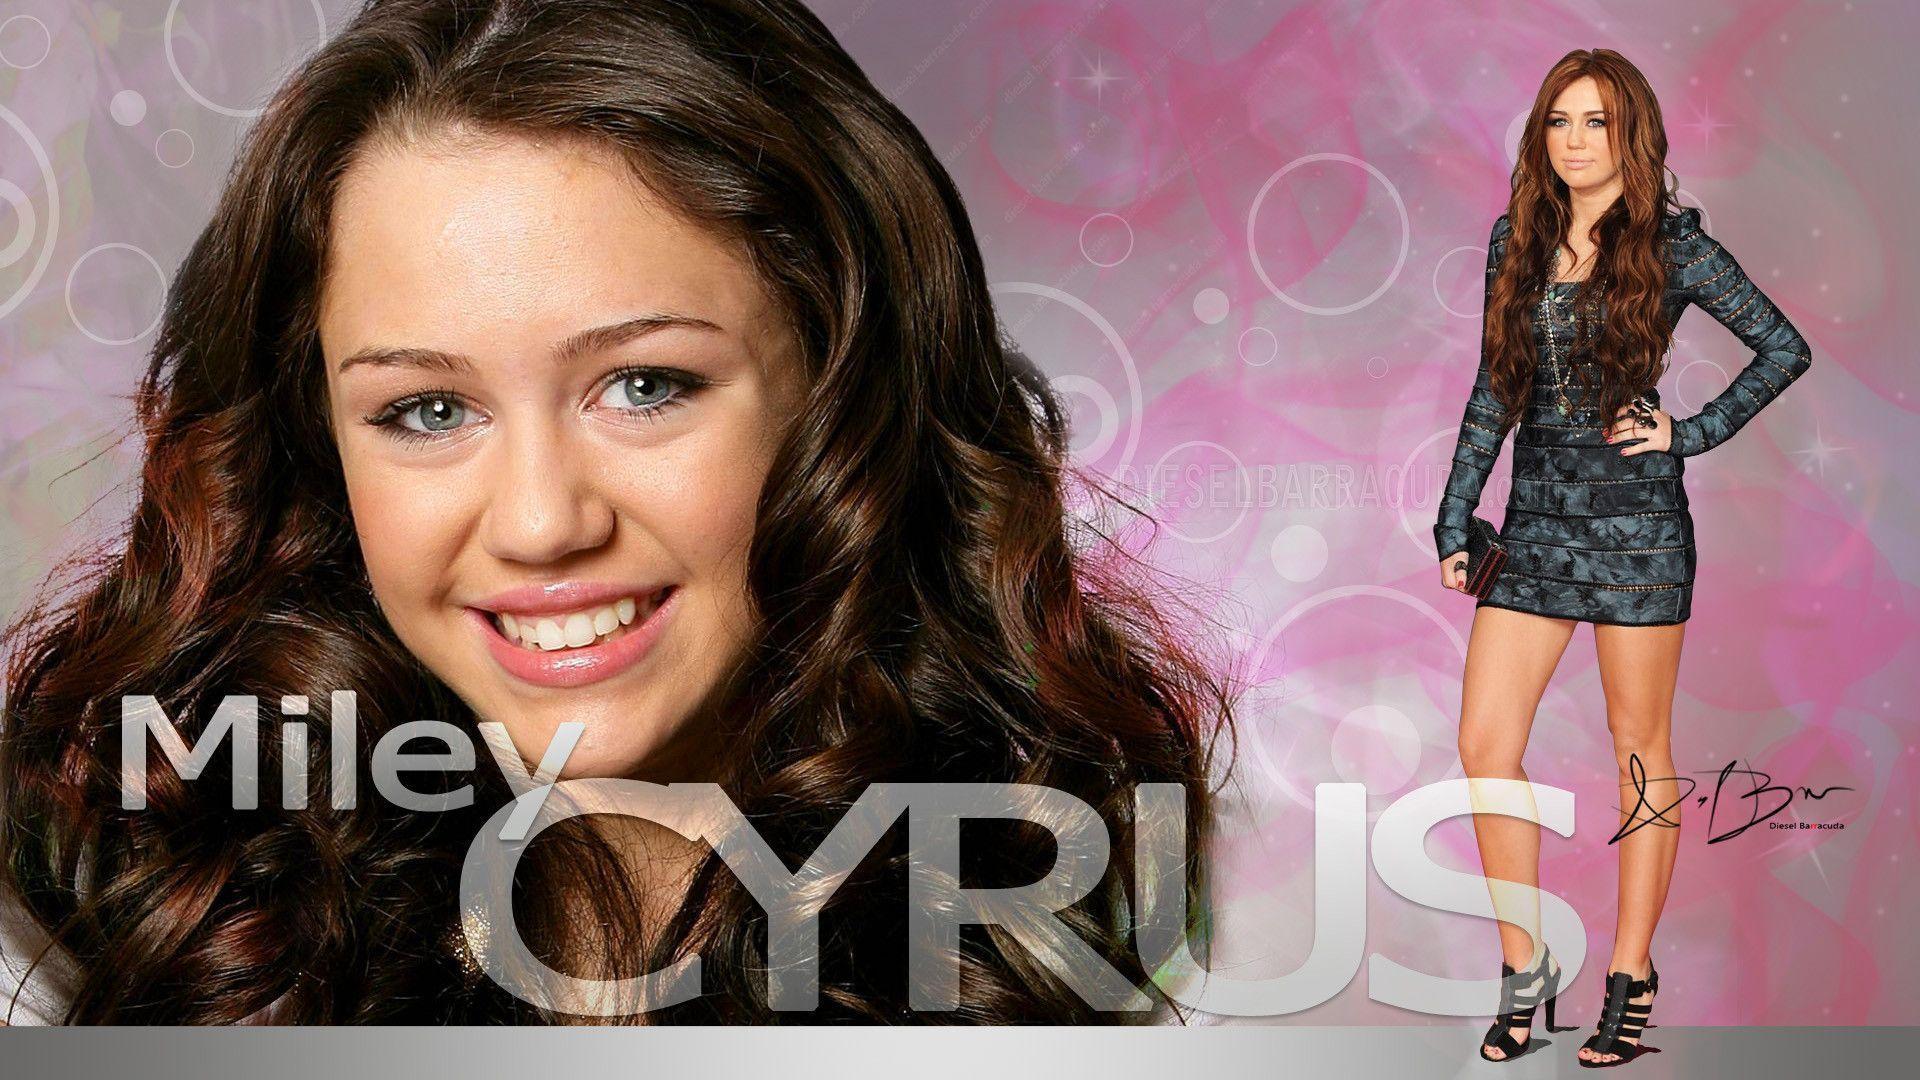 Miley Cyrus Wallpaper 2012 wallpaper